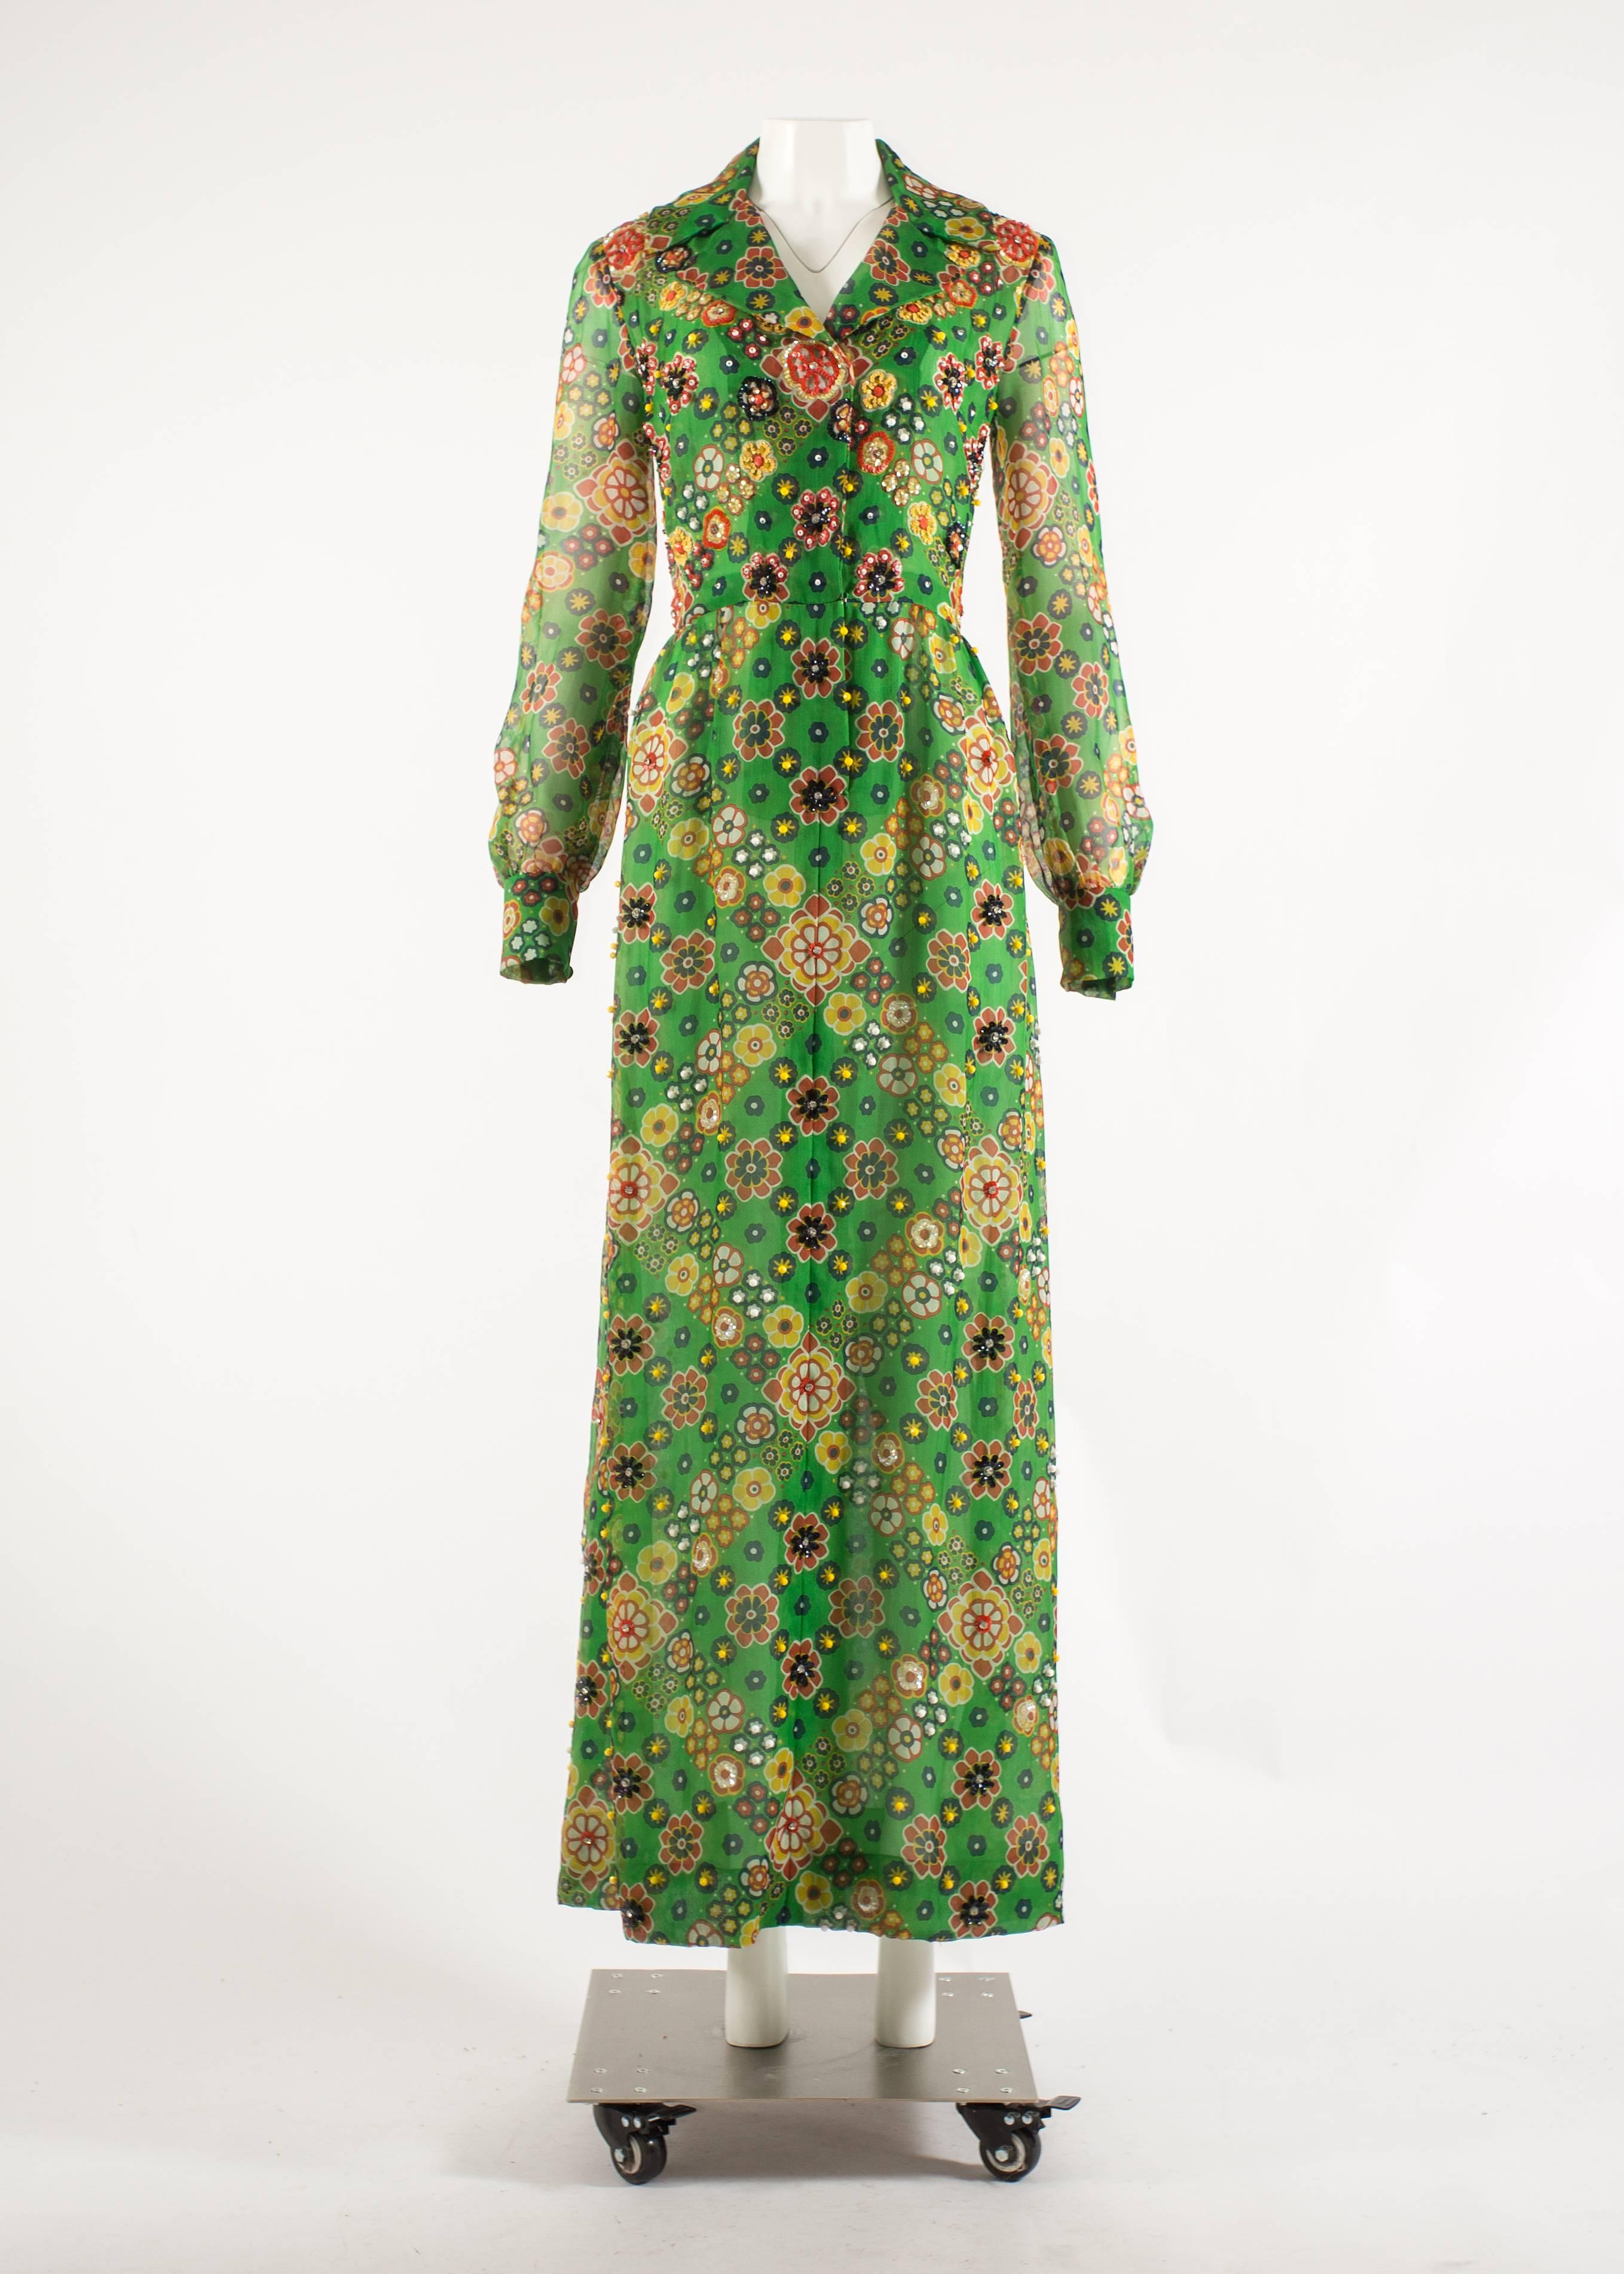 Hardy Amies 1968 silk chiffon embellished maxi dress

